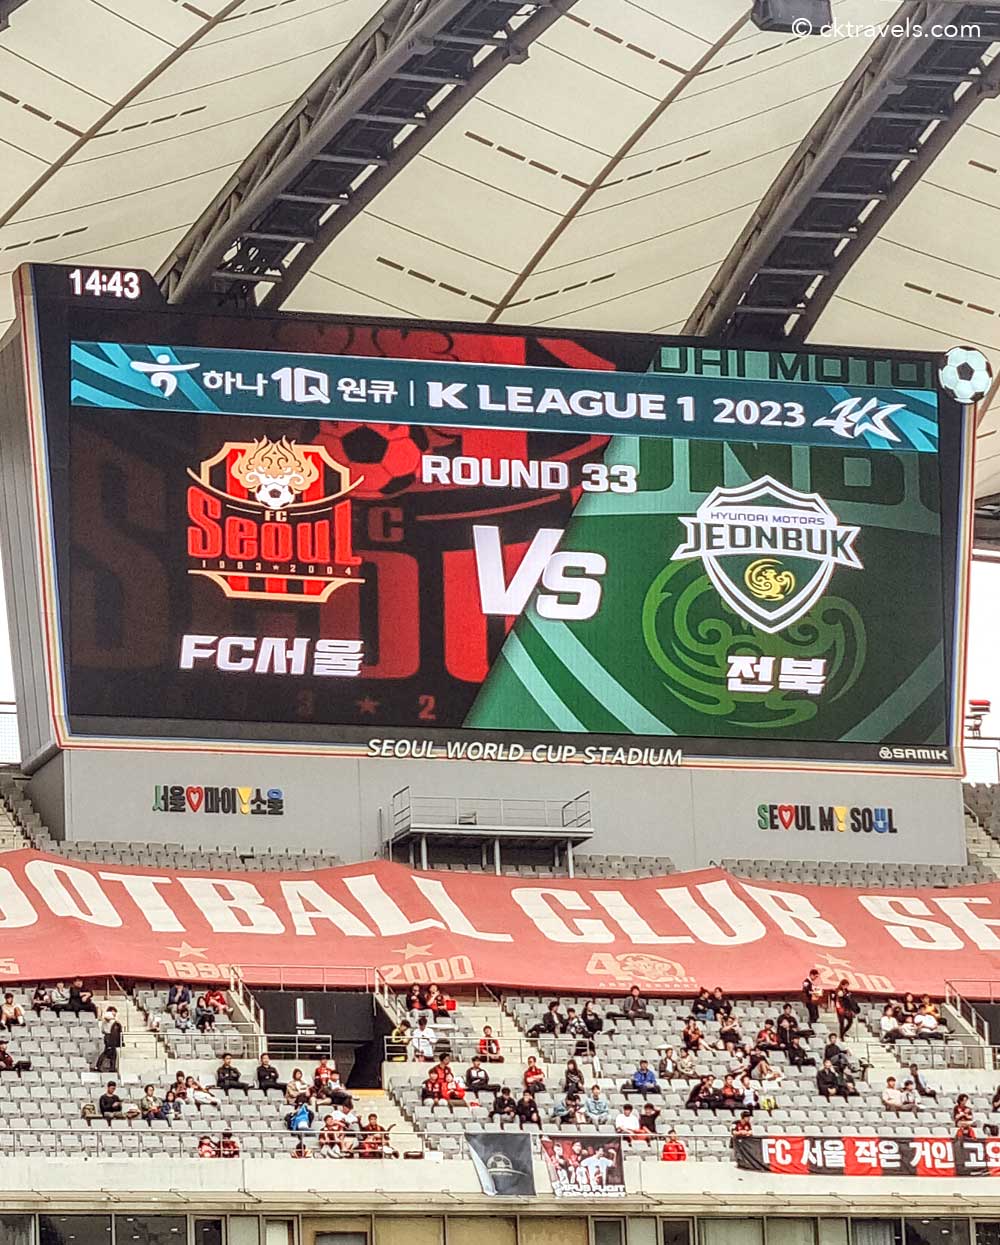 FC Seoul vs. Jeonbuk world cup stadium K league